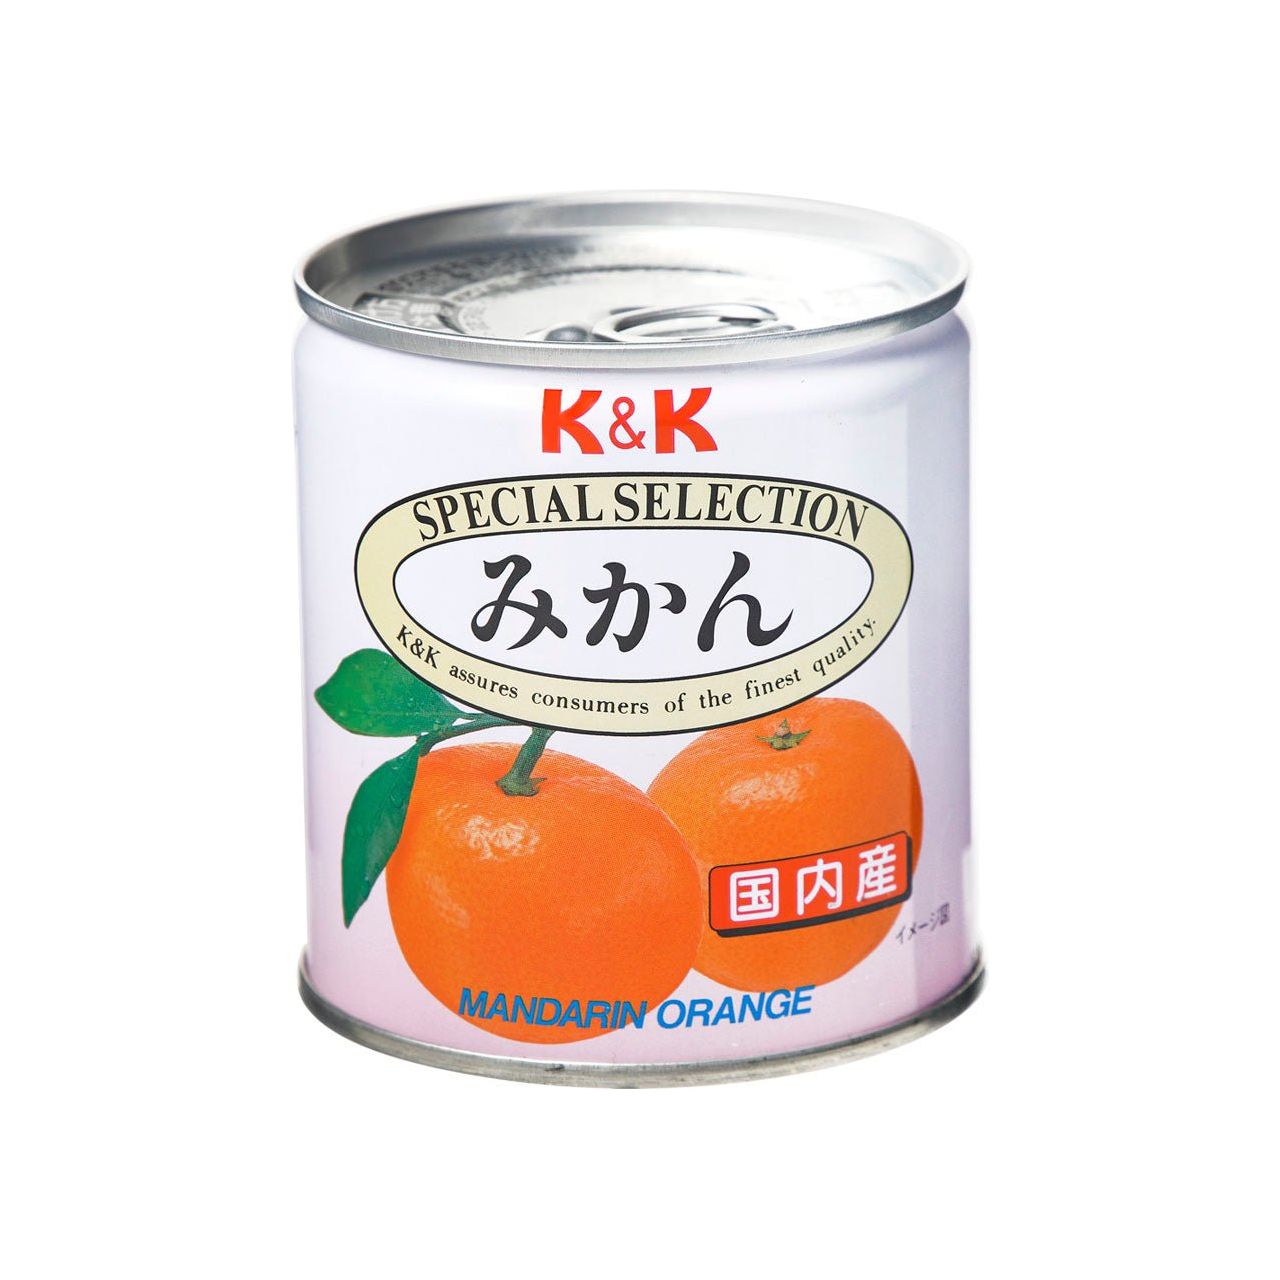 K & K mandarin oranges (small)